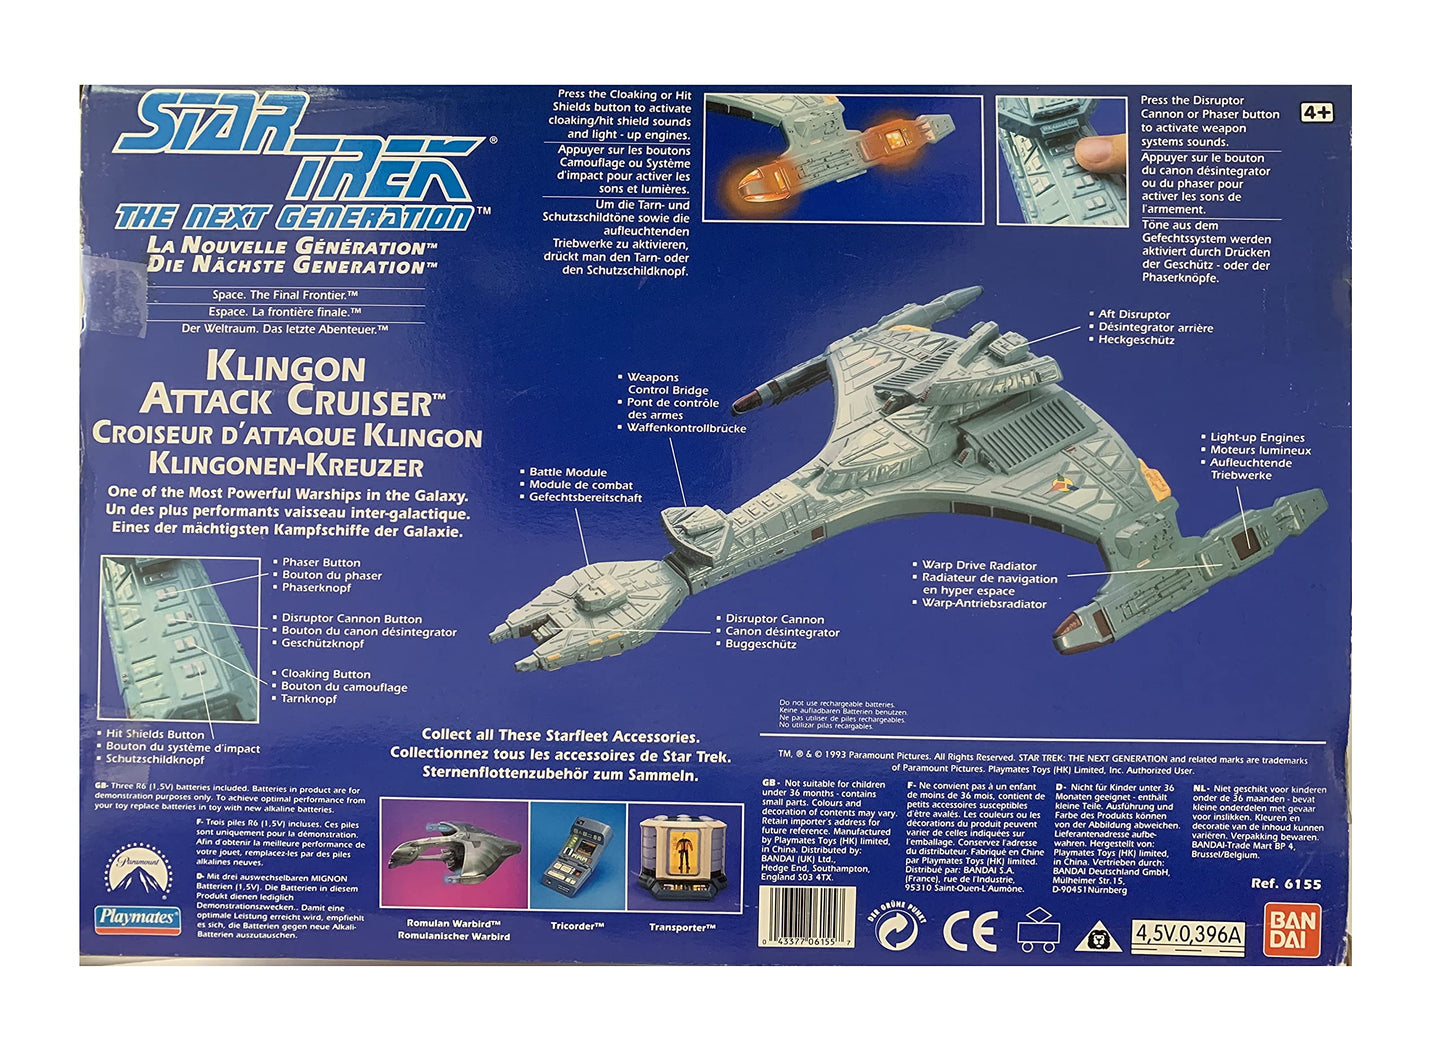 Vintage Playmates 1993 Star Trek The Next Generation Collectors Series Electronic Klingon Attack Cruiser Replica Star Ship - Shop Stock Room Find